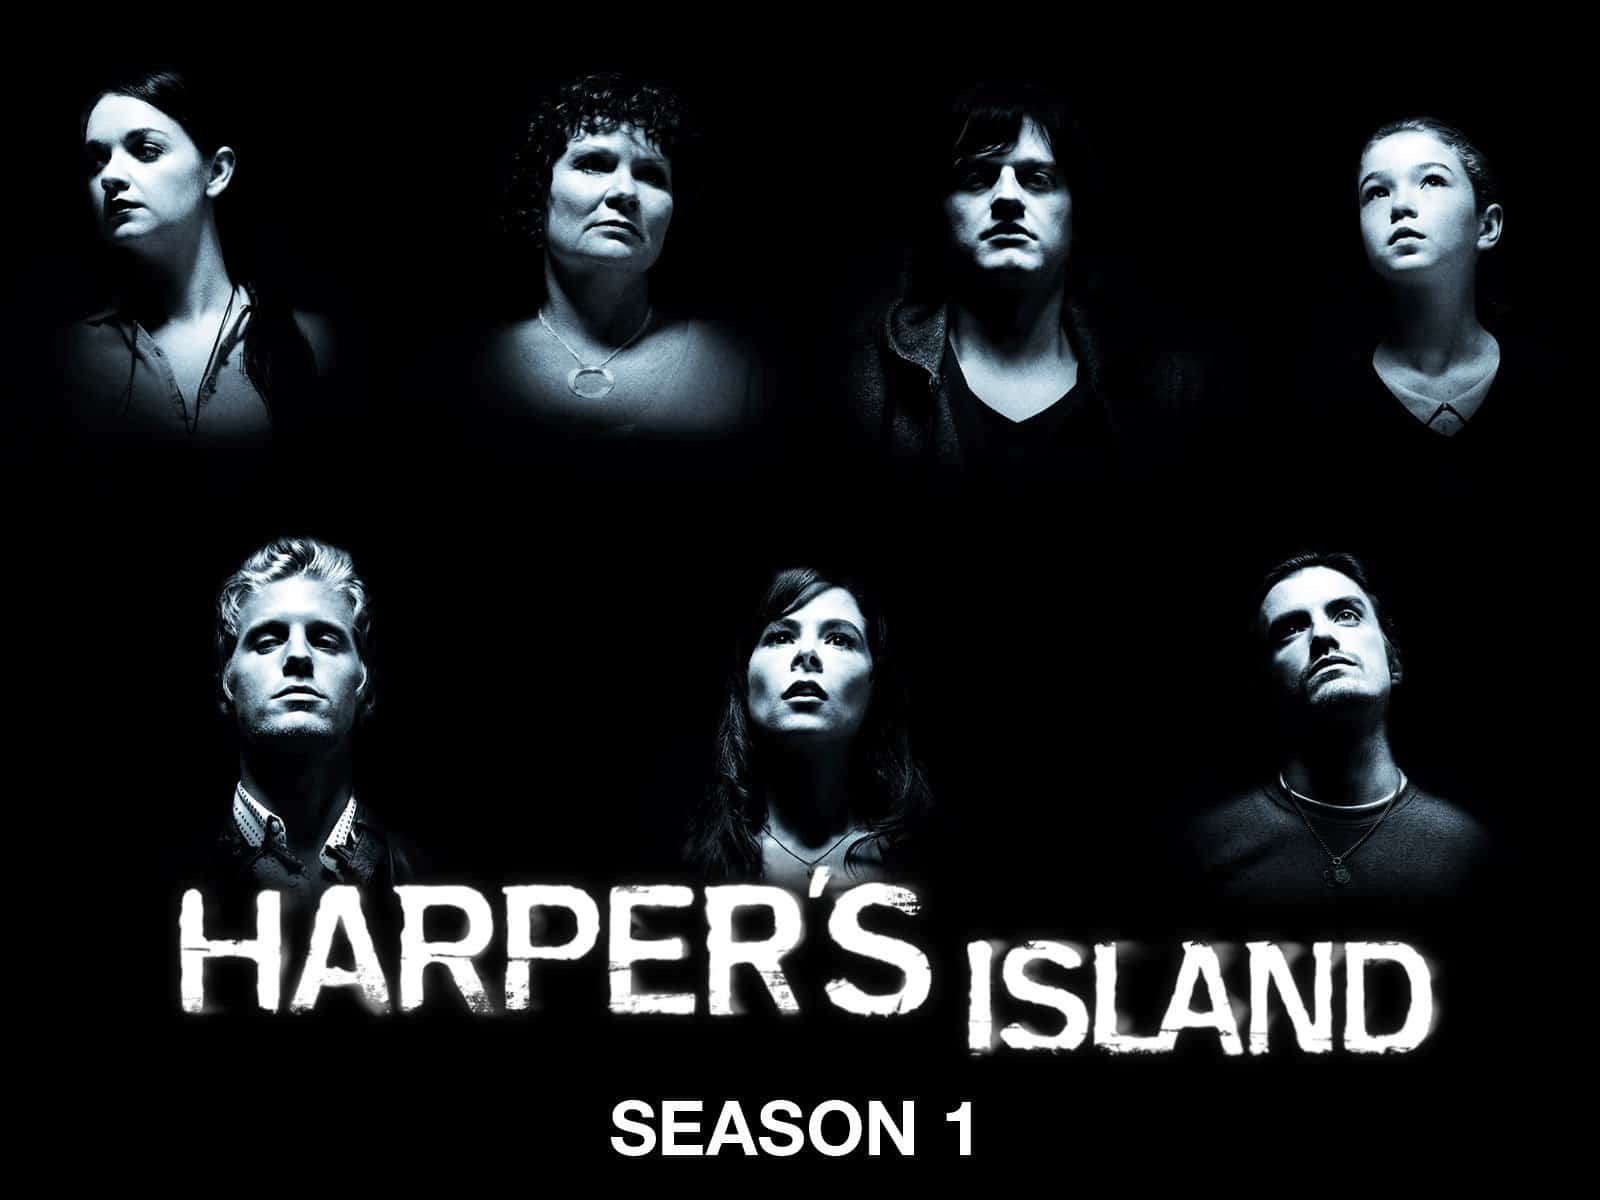 Harper's Island 2009